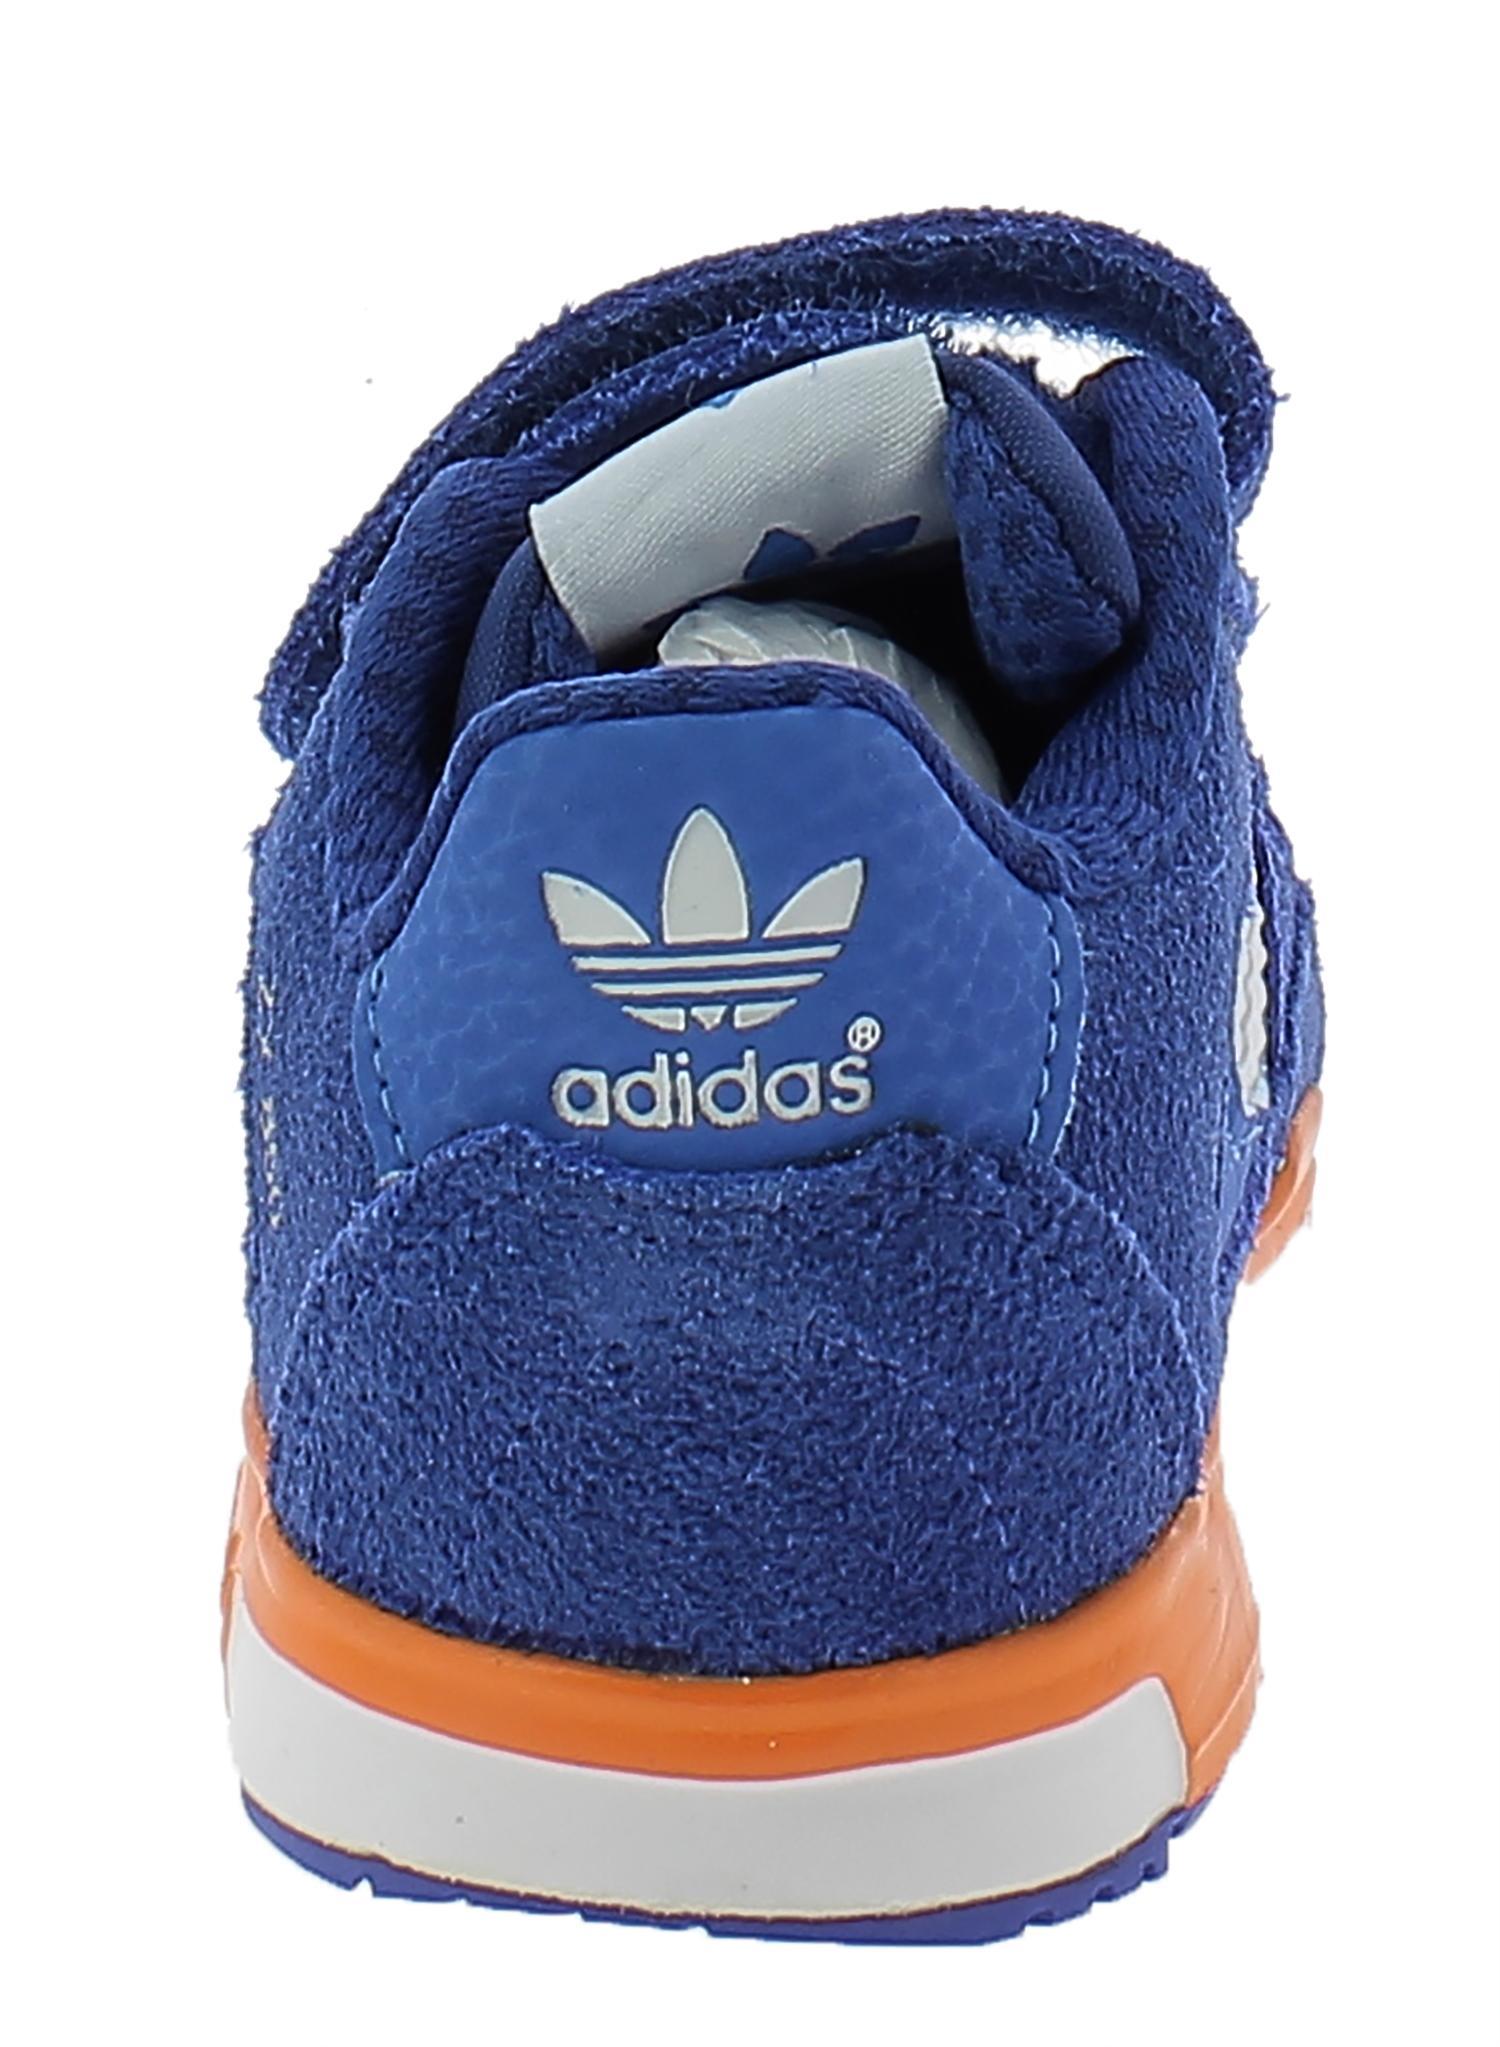 adidas adidas zx 850 cf i scarpe sportive bambino blu pelle strappi m19744